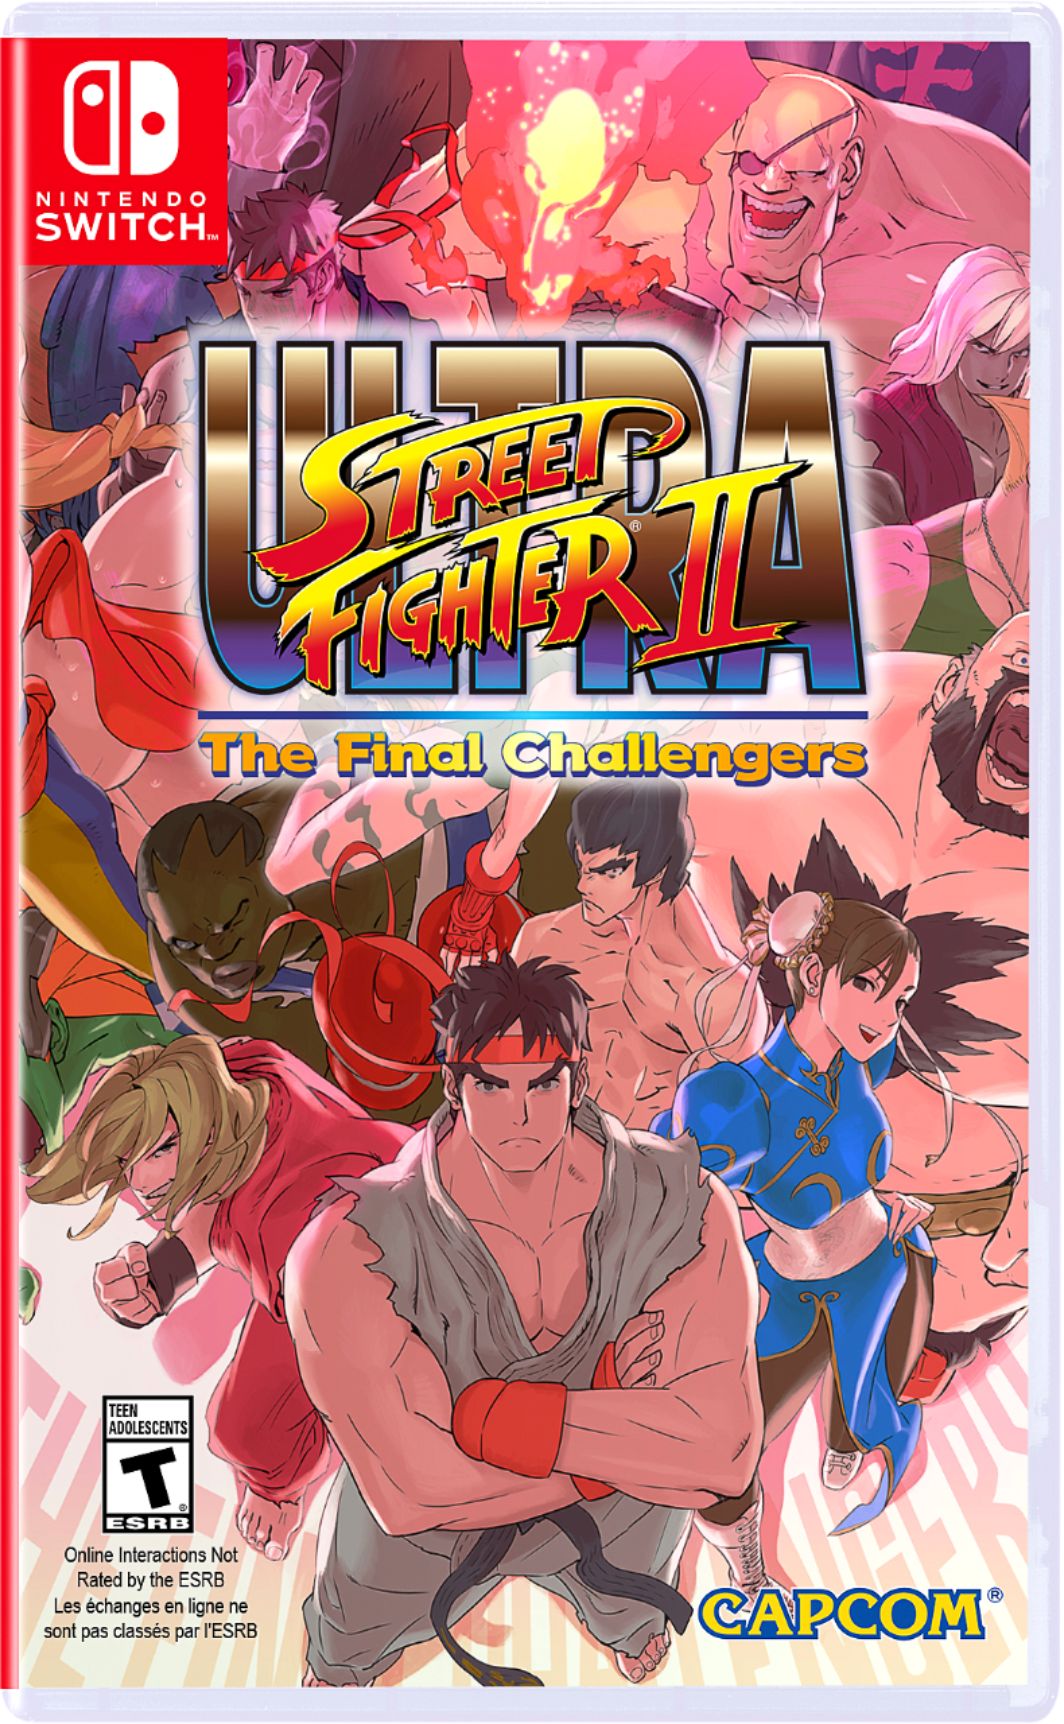 Street Fighter® 3D Mini Pixel Fighter – Ryu